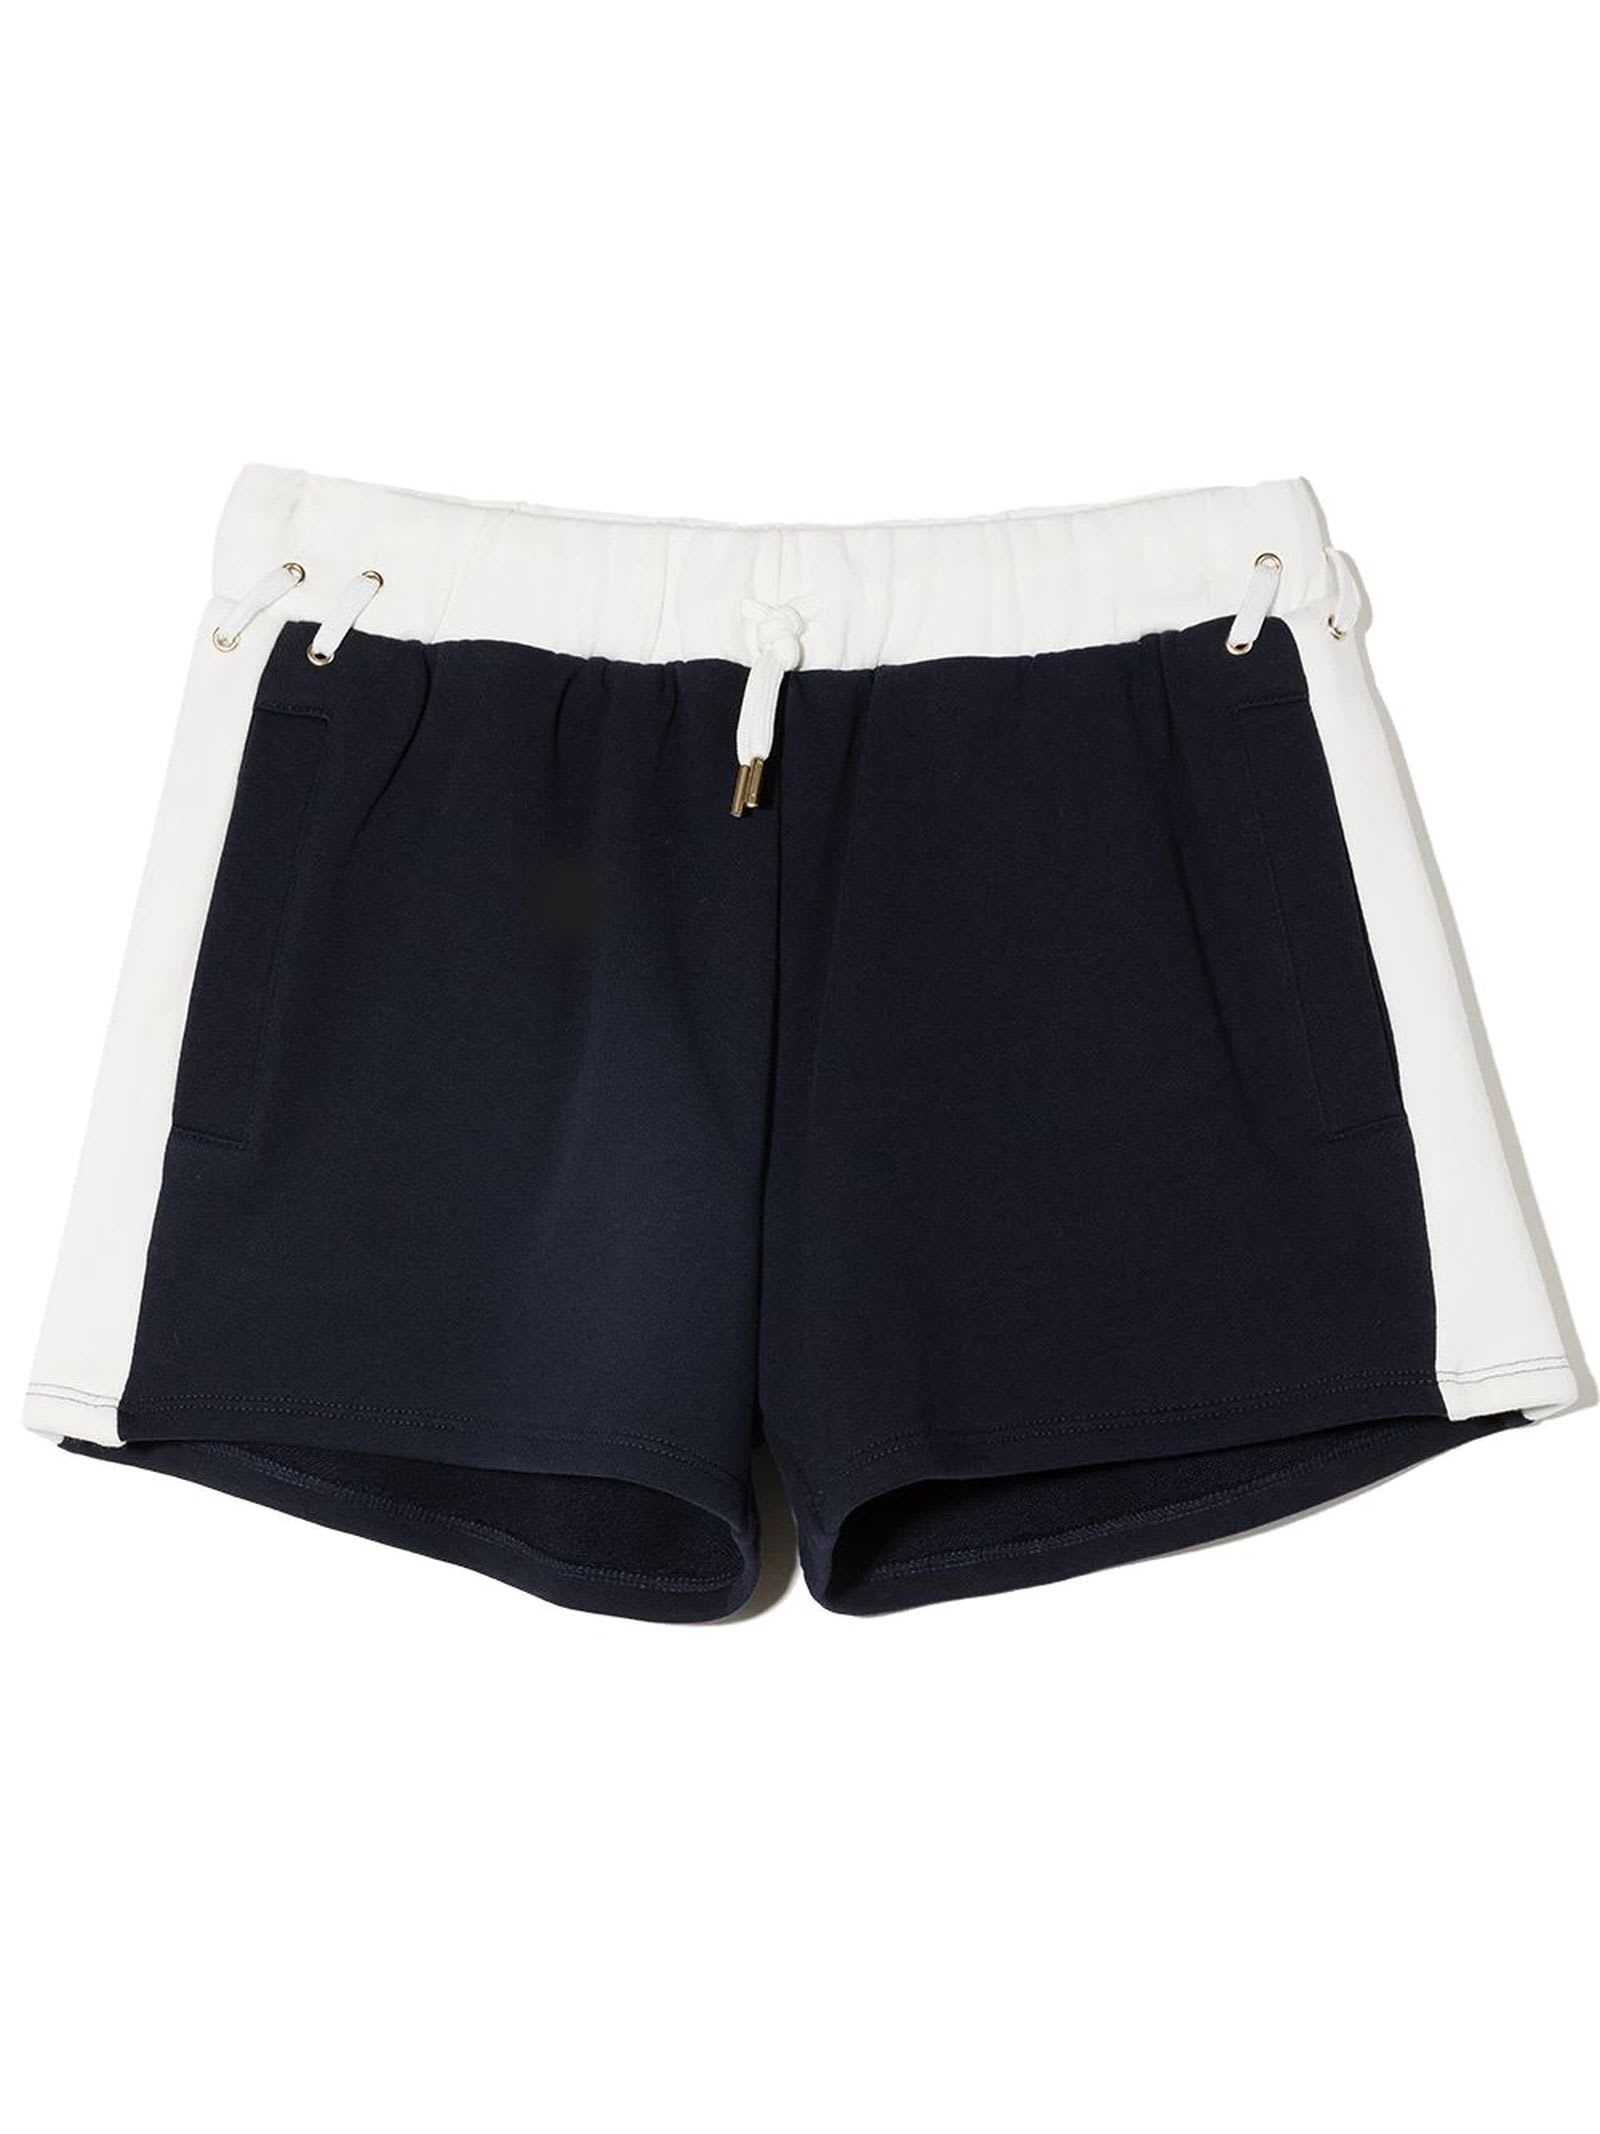 Chloé Black Cotton Shorts